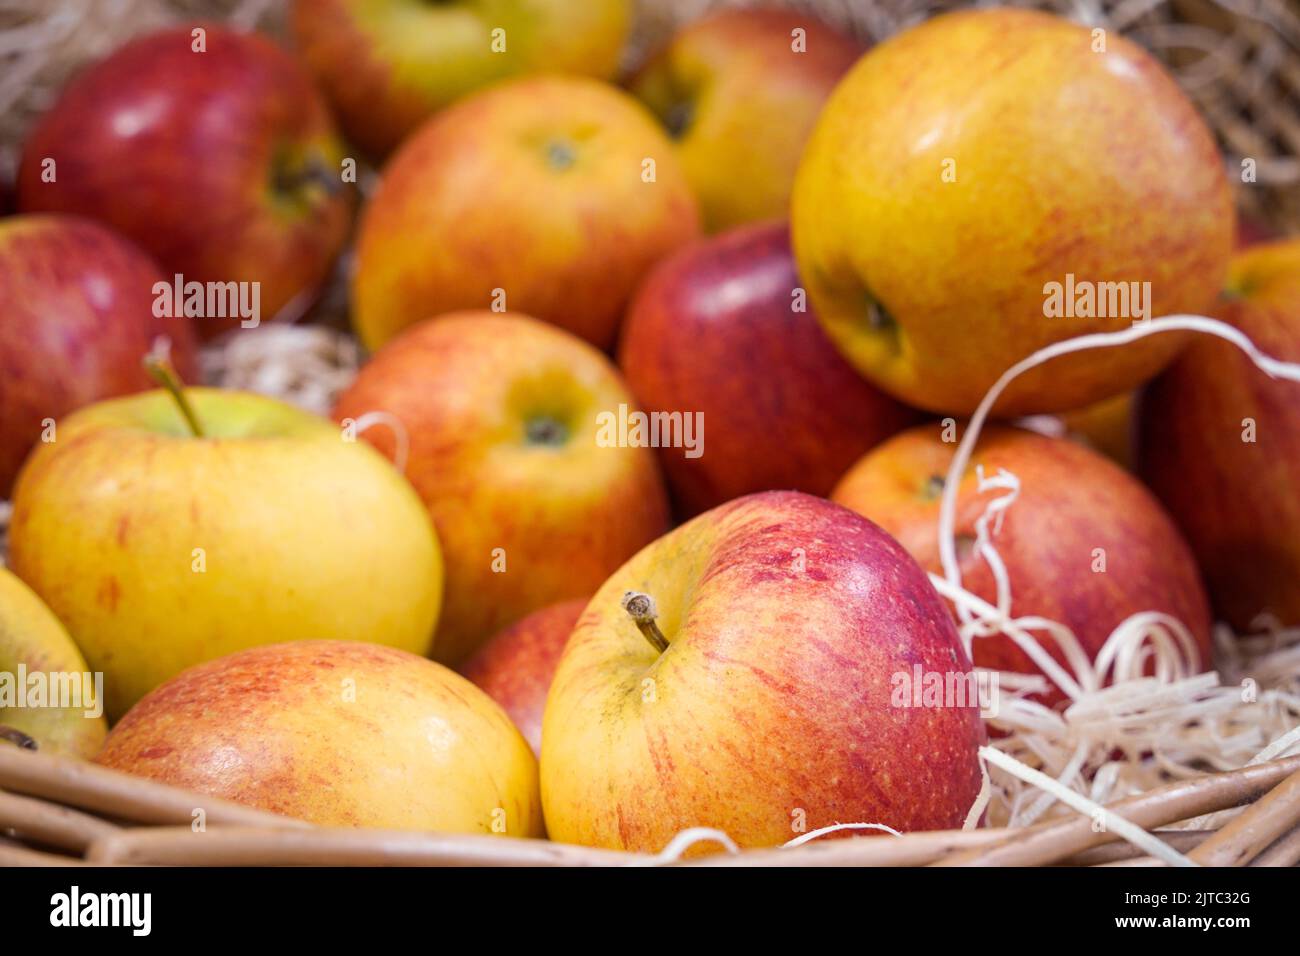 Old Apple Tree Co, Buy Organic Fresh Gala Apples